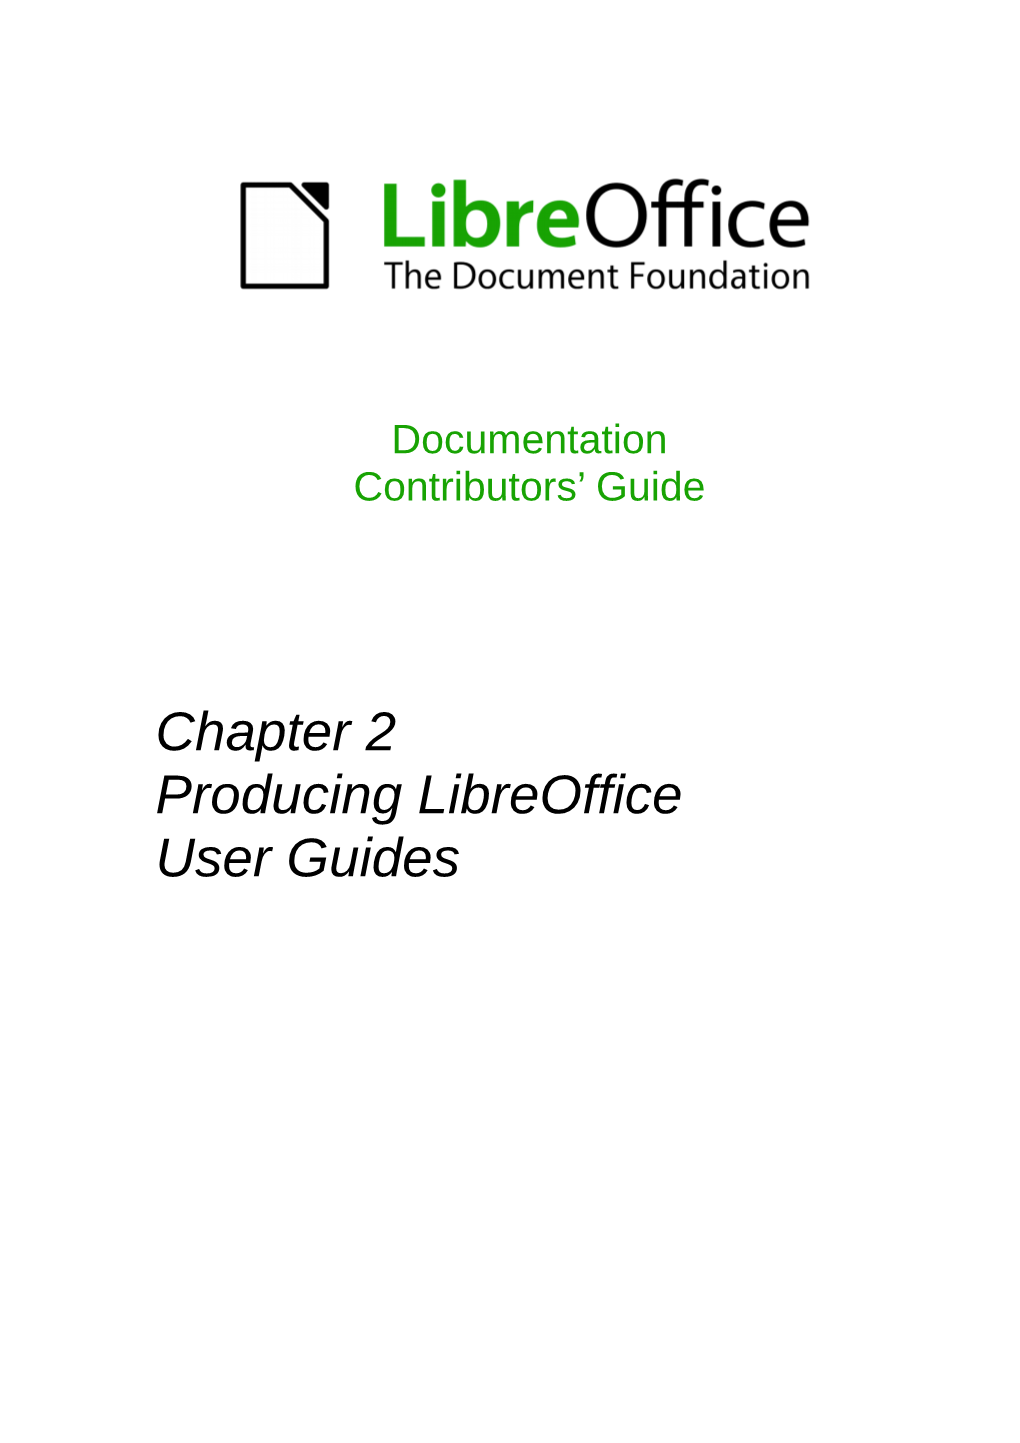 Producing Libreoffice User Guides Copyright